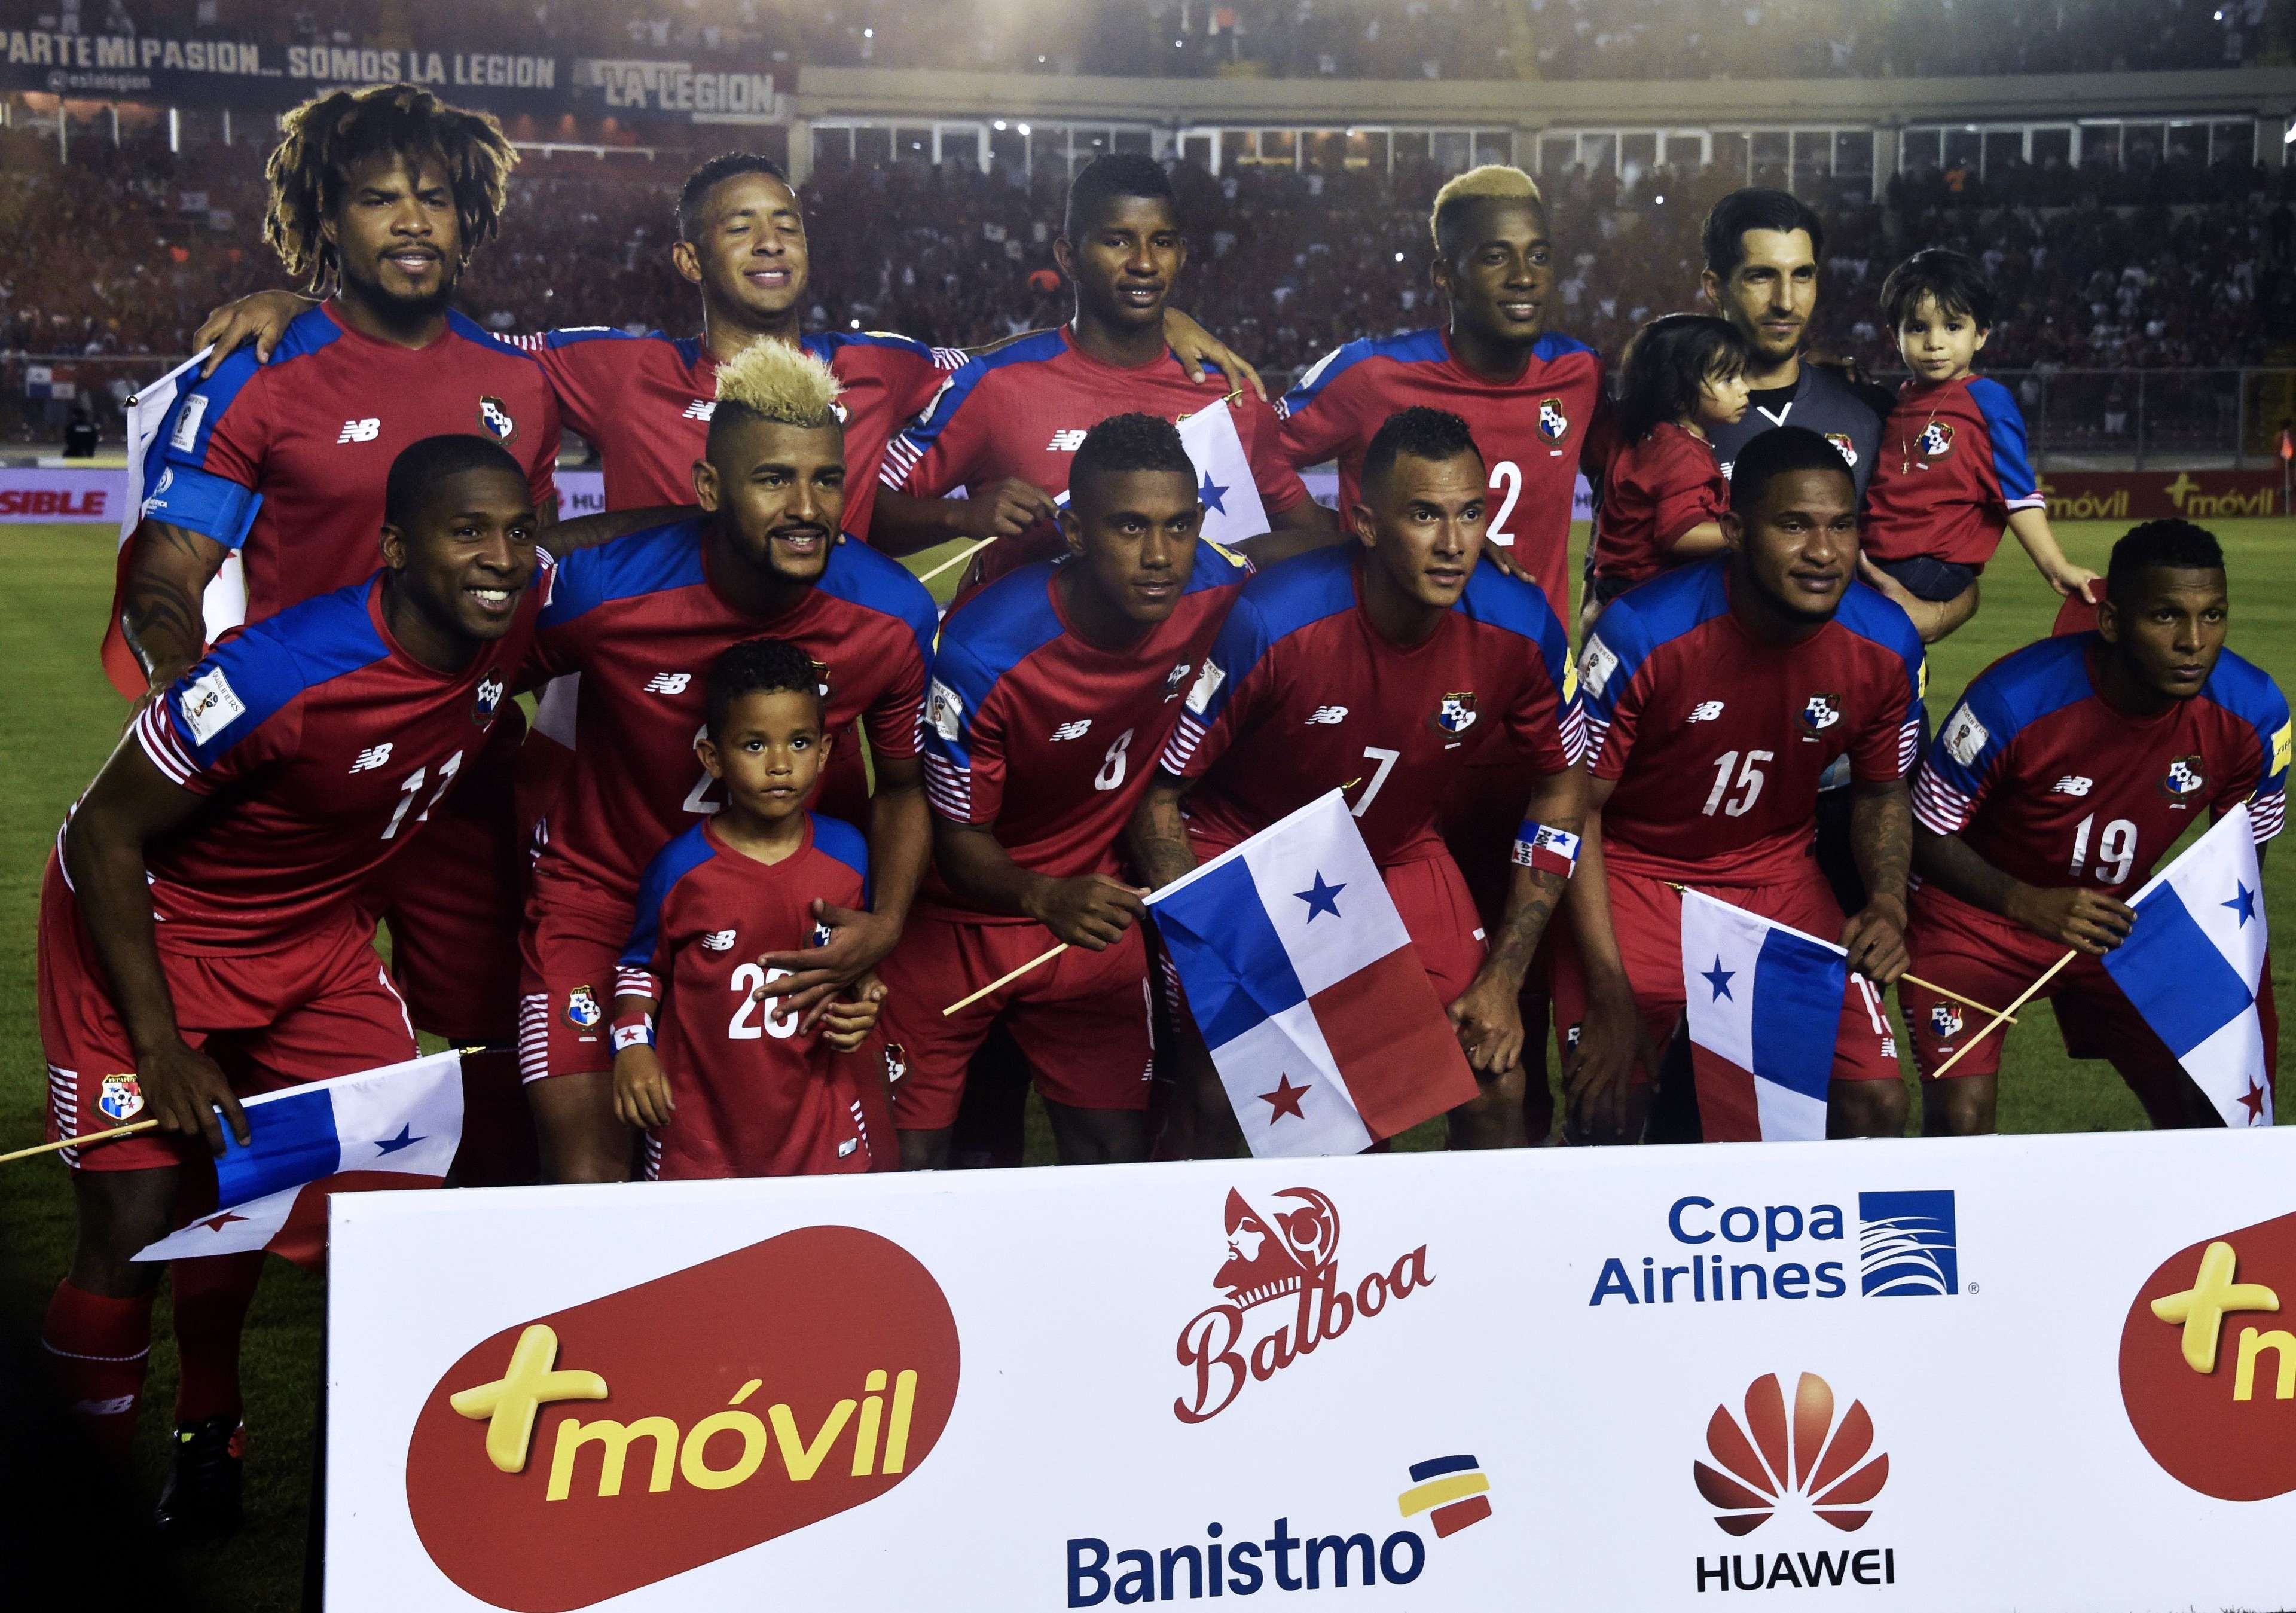 Panama national team